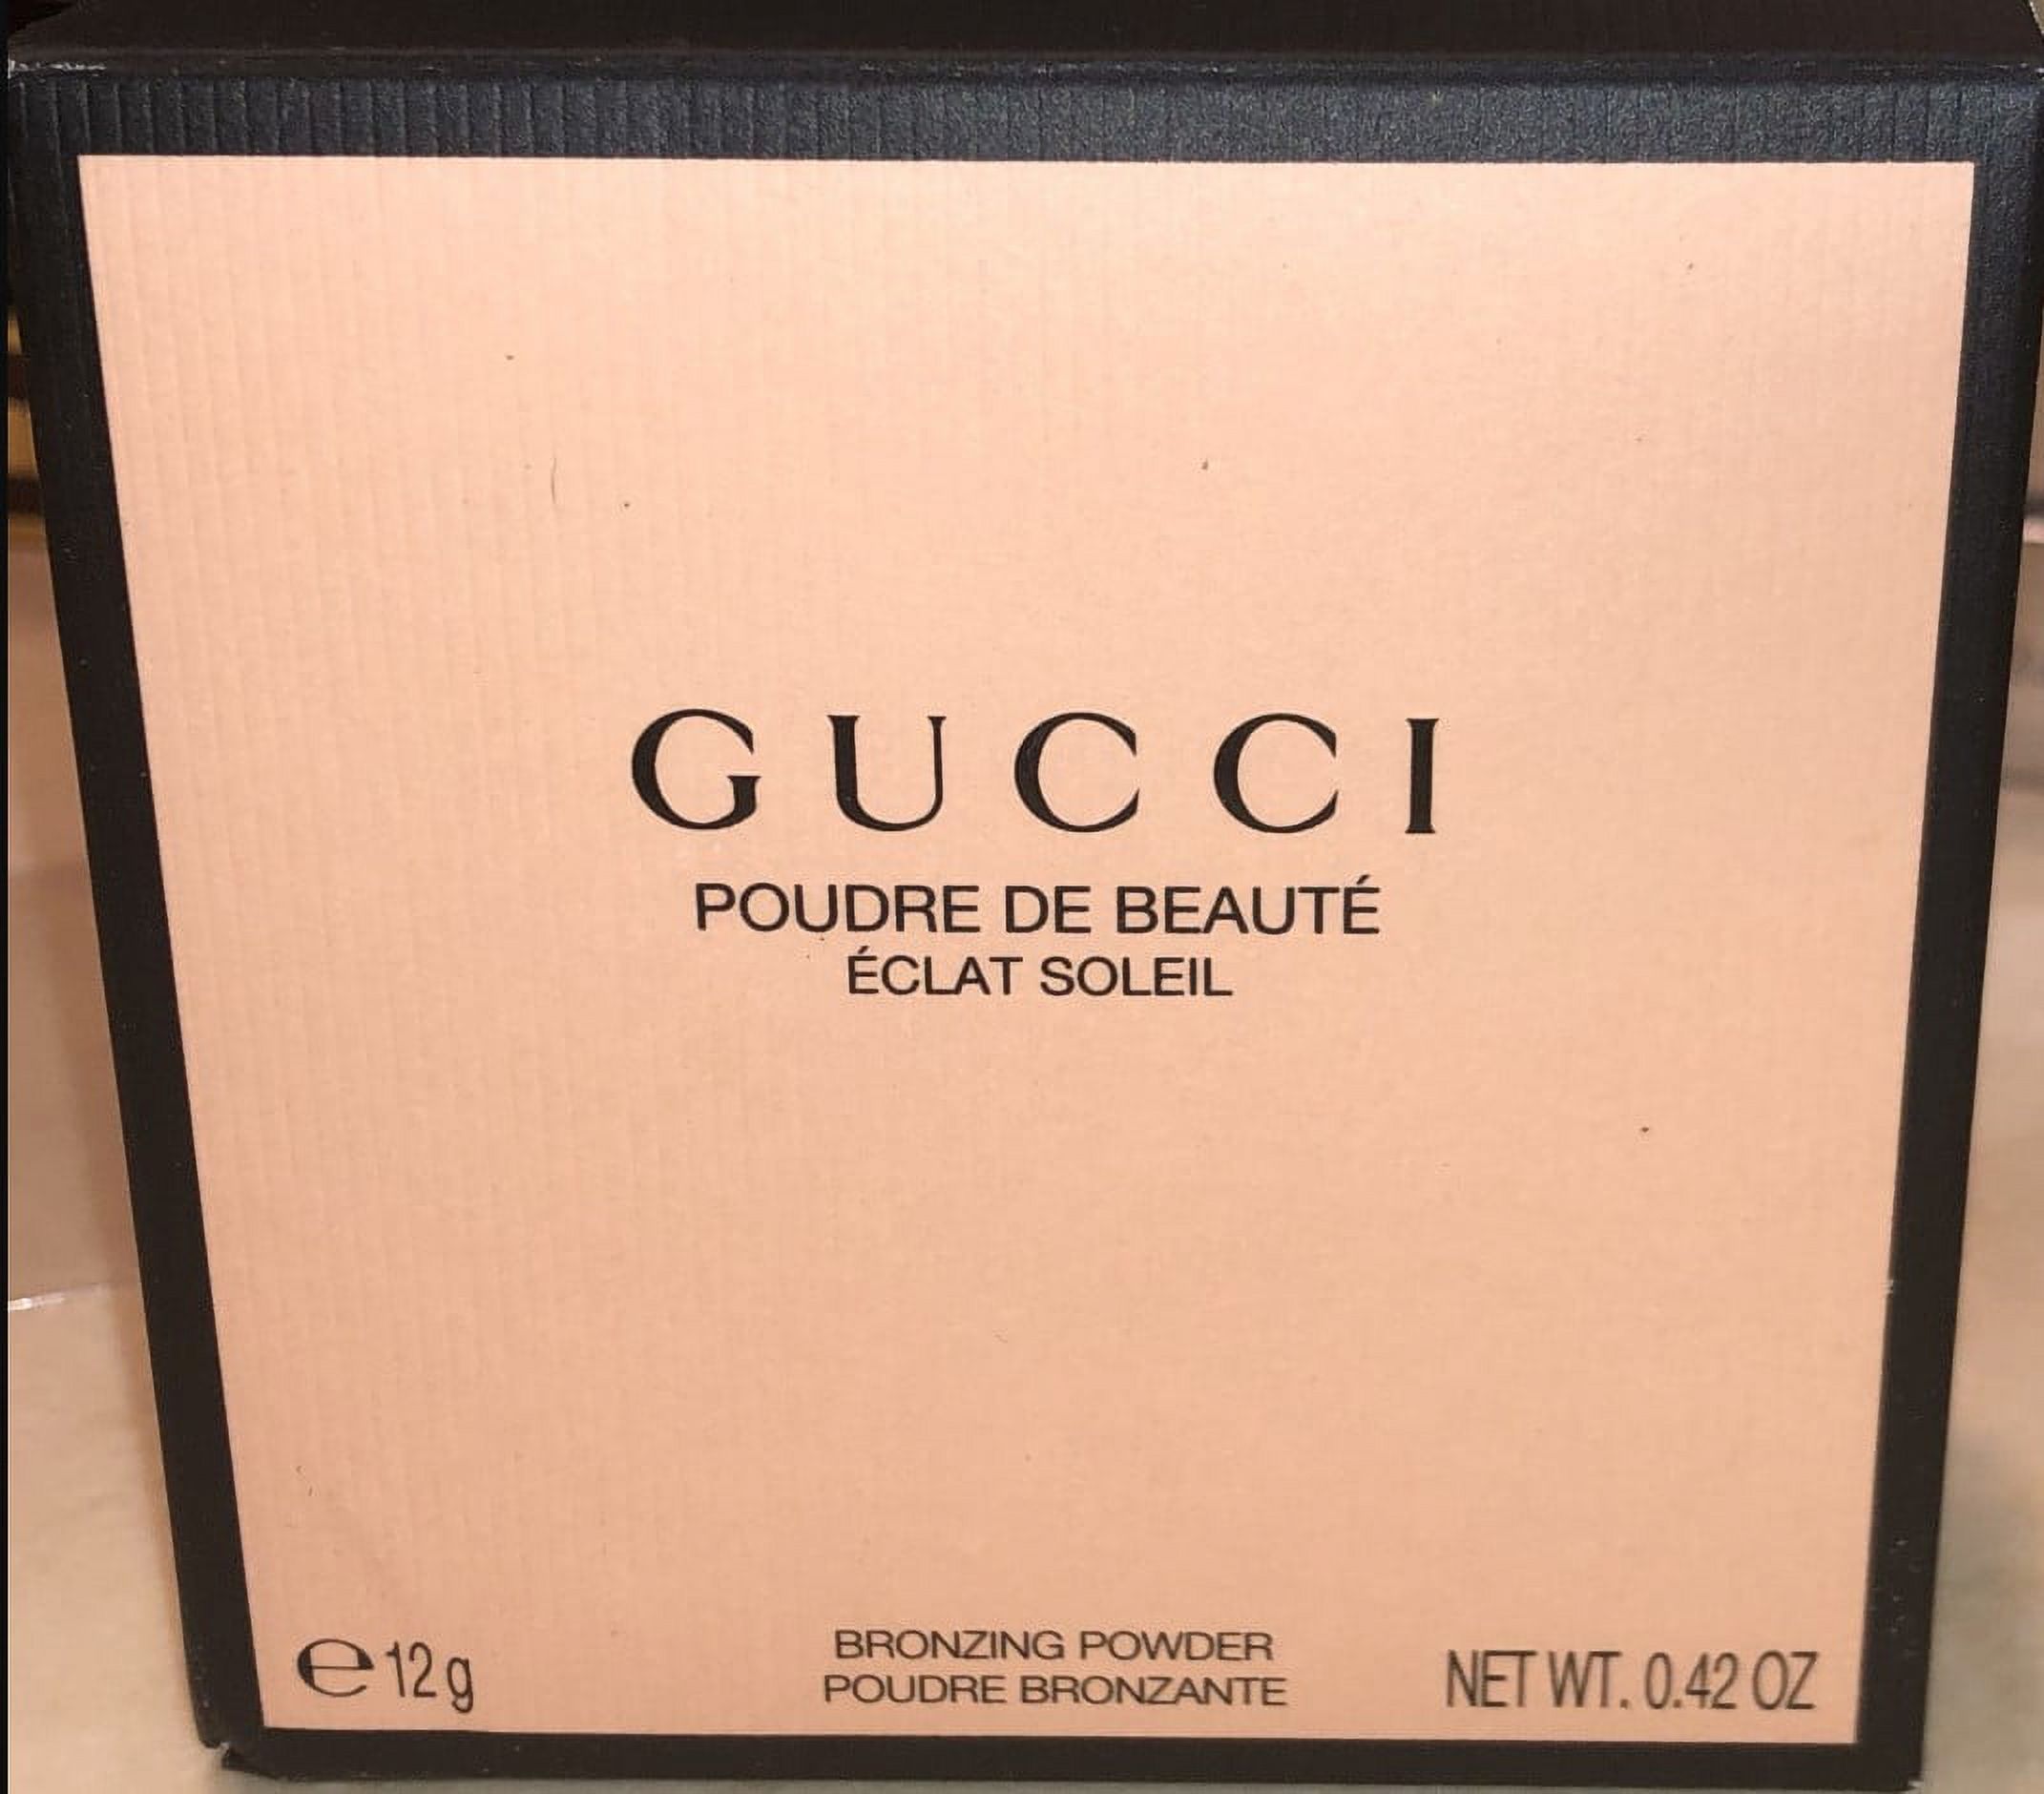 Gucci Poudre De Beaute Bronzing Powder 05 0.42Oz/12g New With Box - image 2 of 2